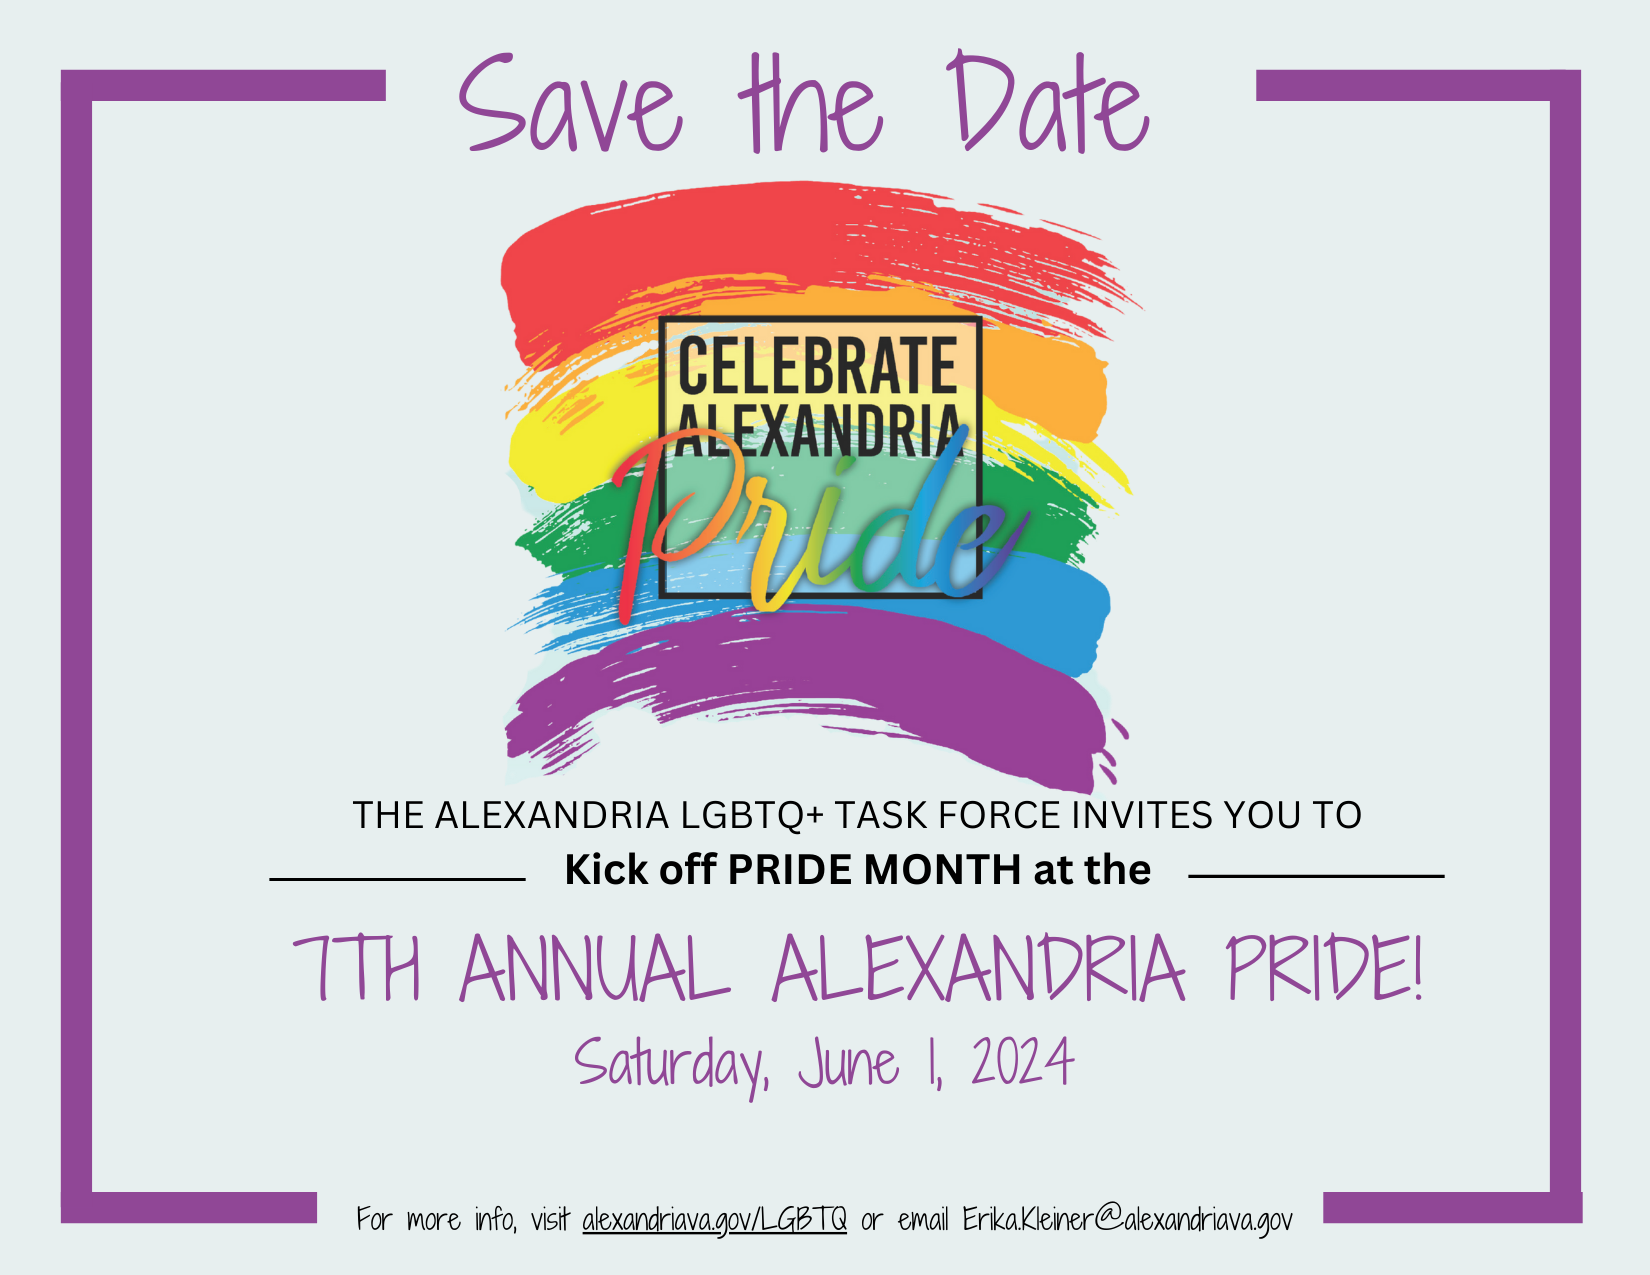 Celebrate Alexandria pride Save the Date